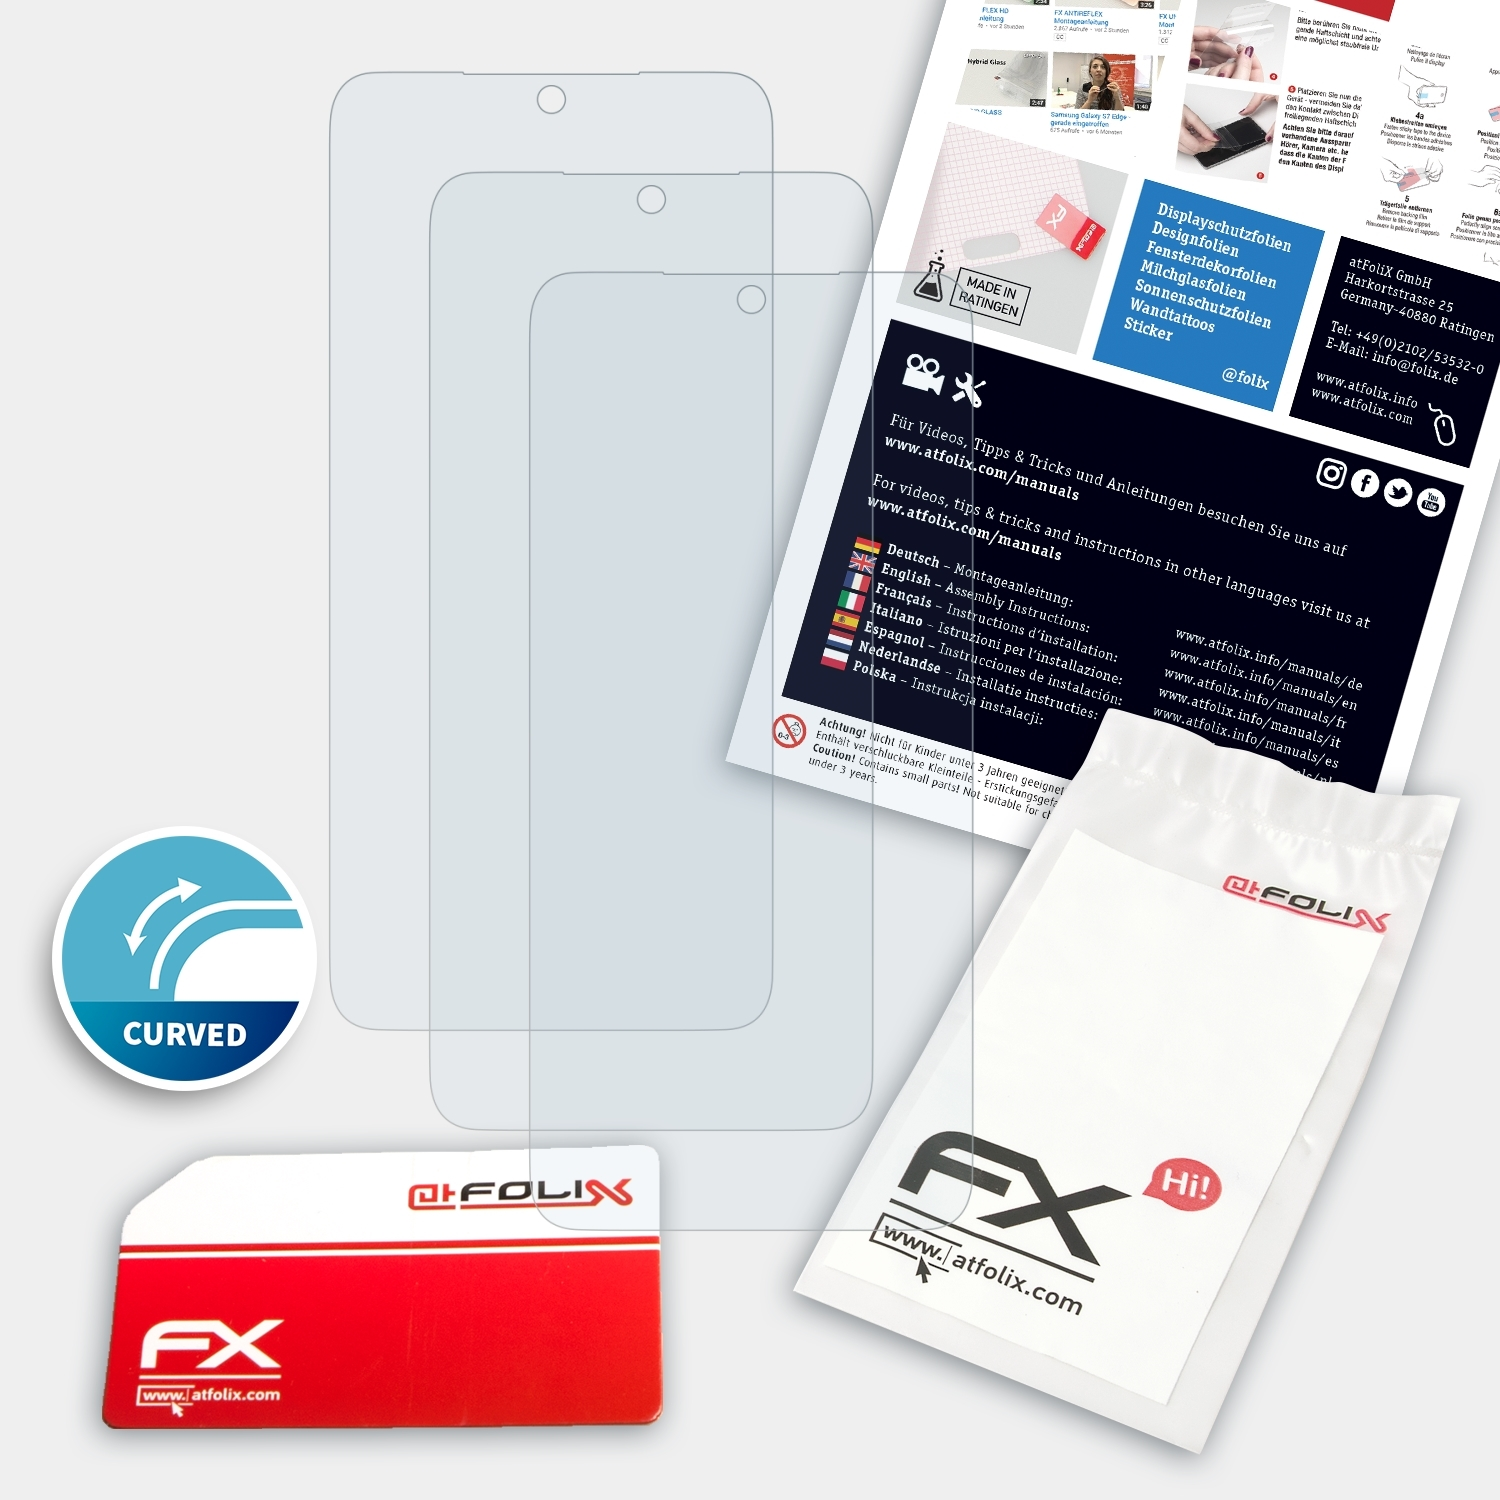 ATFOLIX 3x X70) Displayschutz(für Vivo FX-ActiFleX